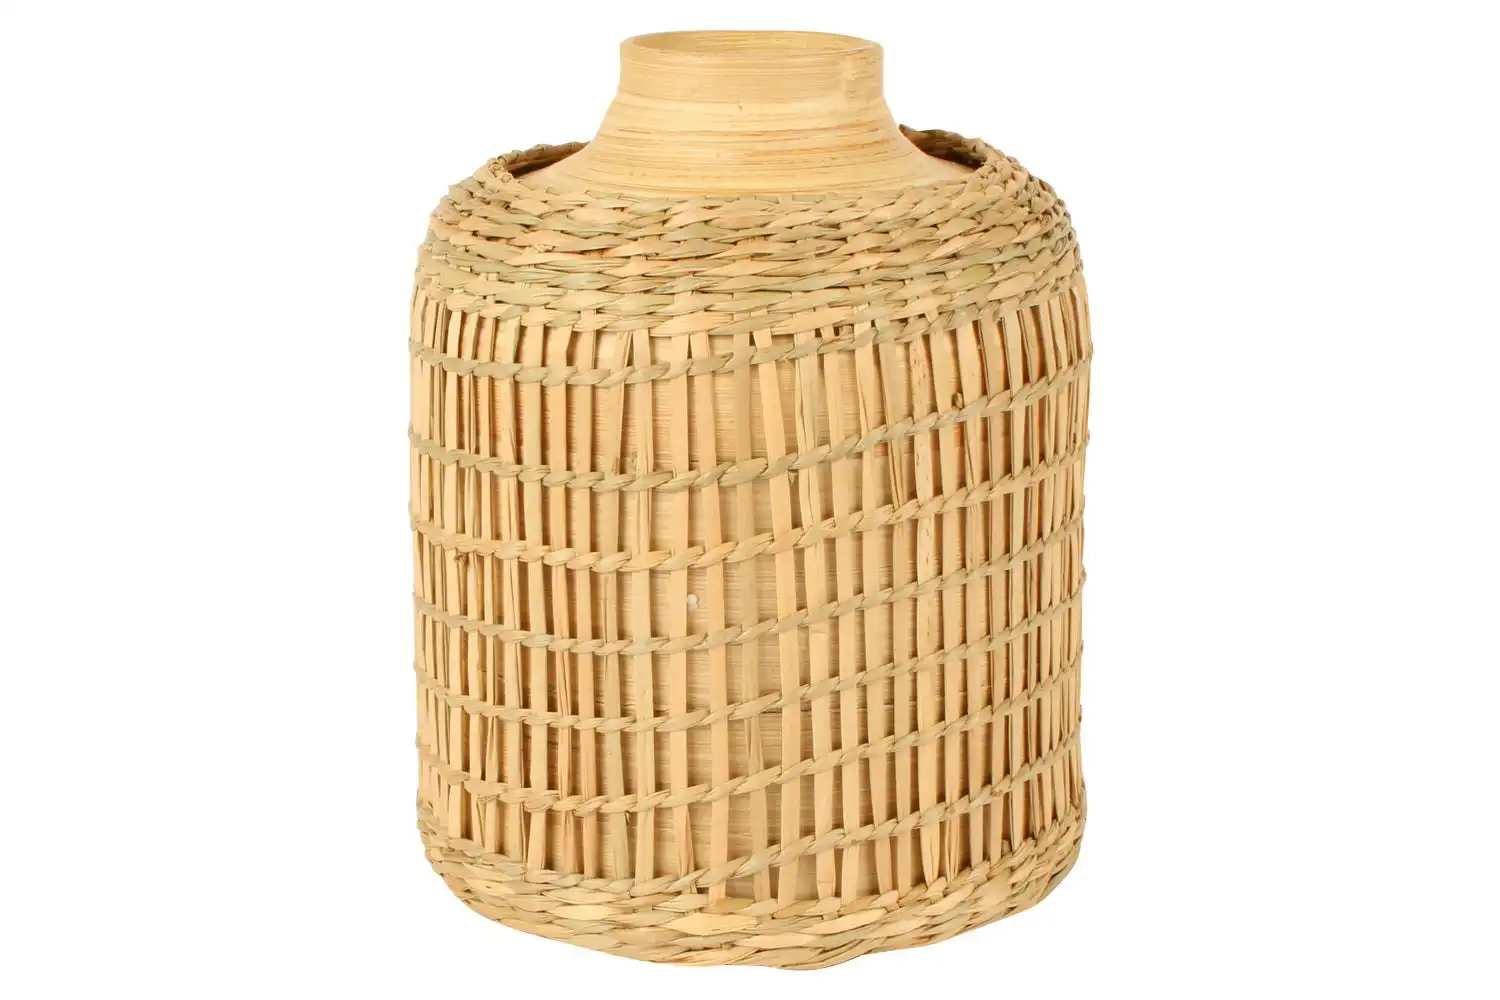 Abui Bamboo Vase 19 x 15cm